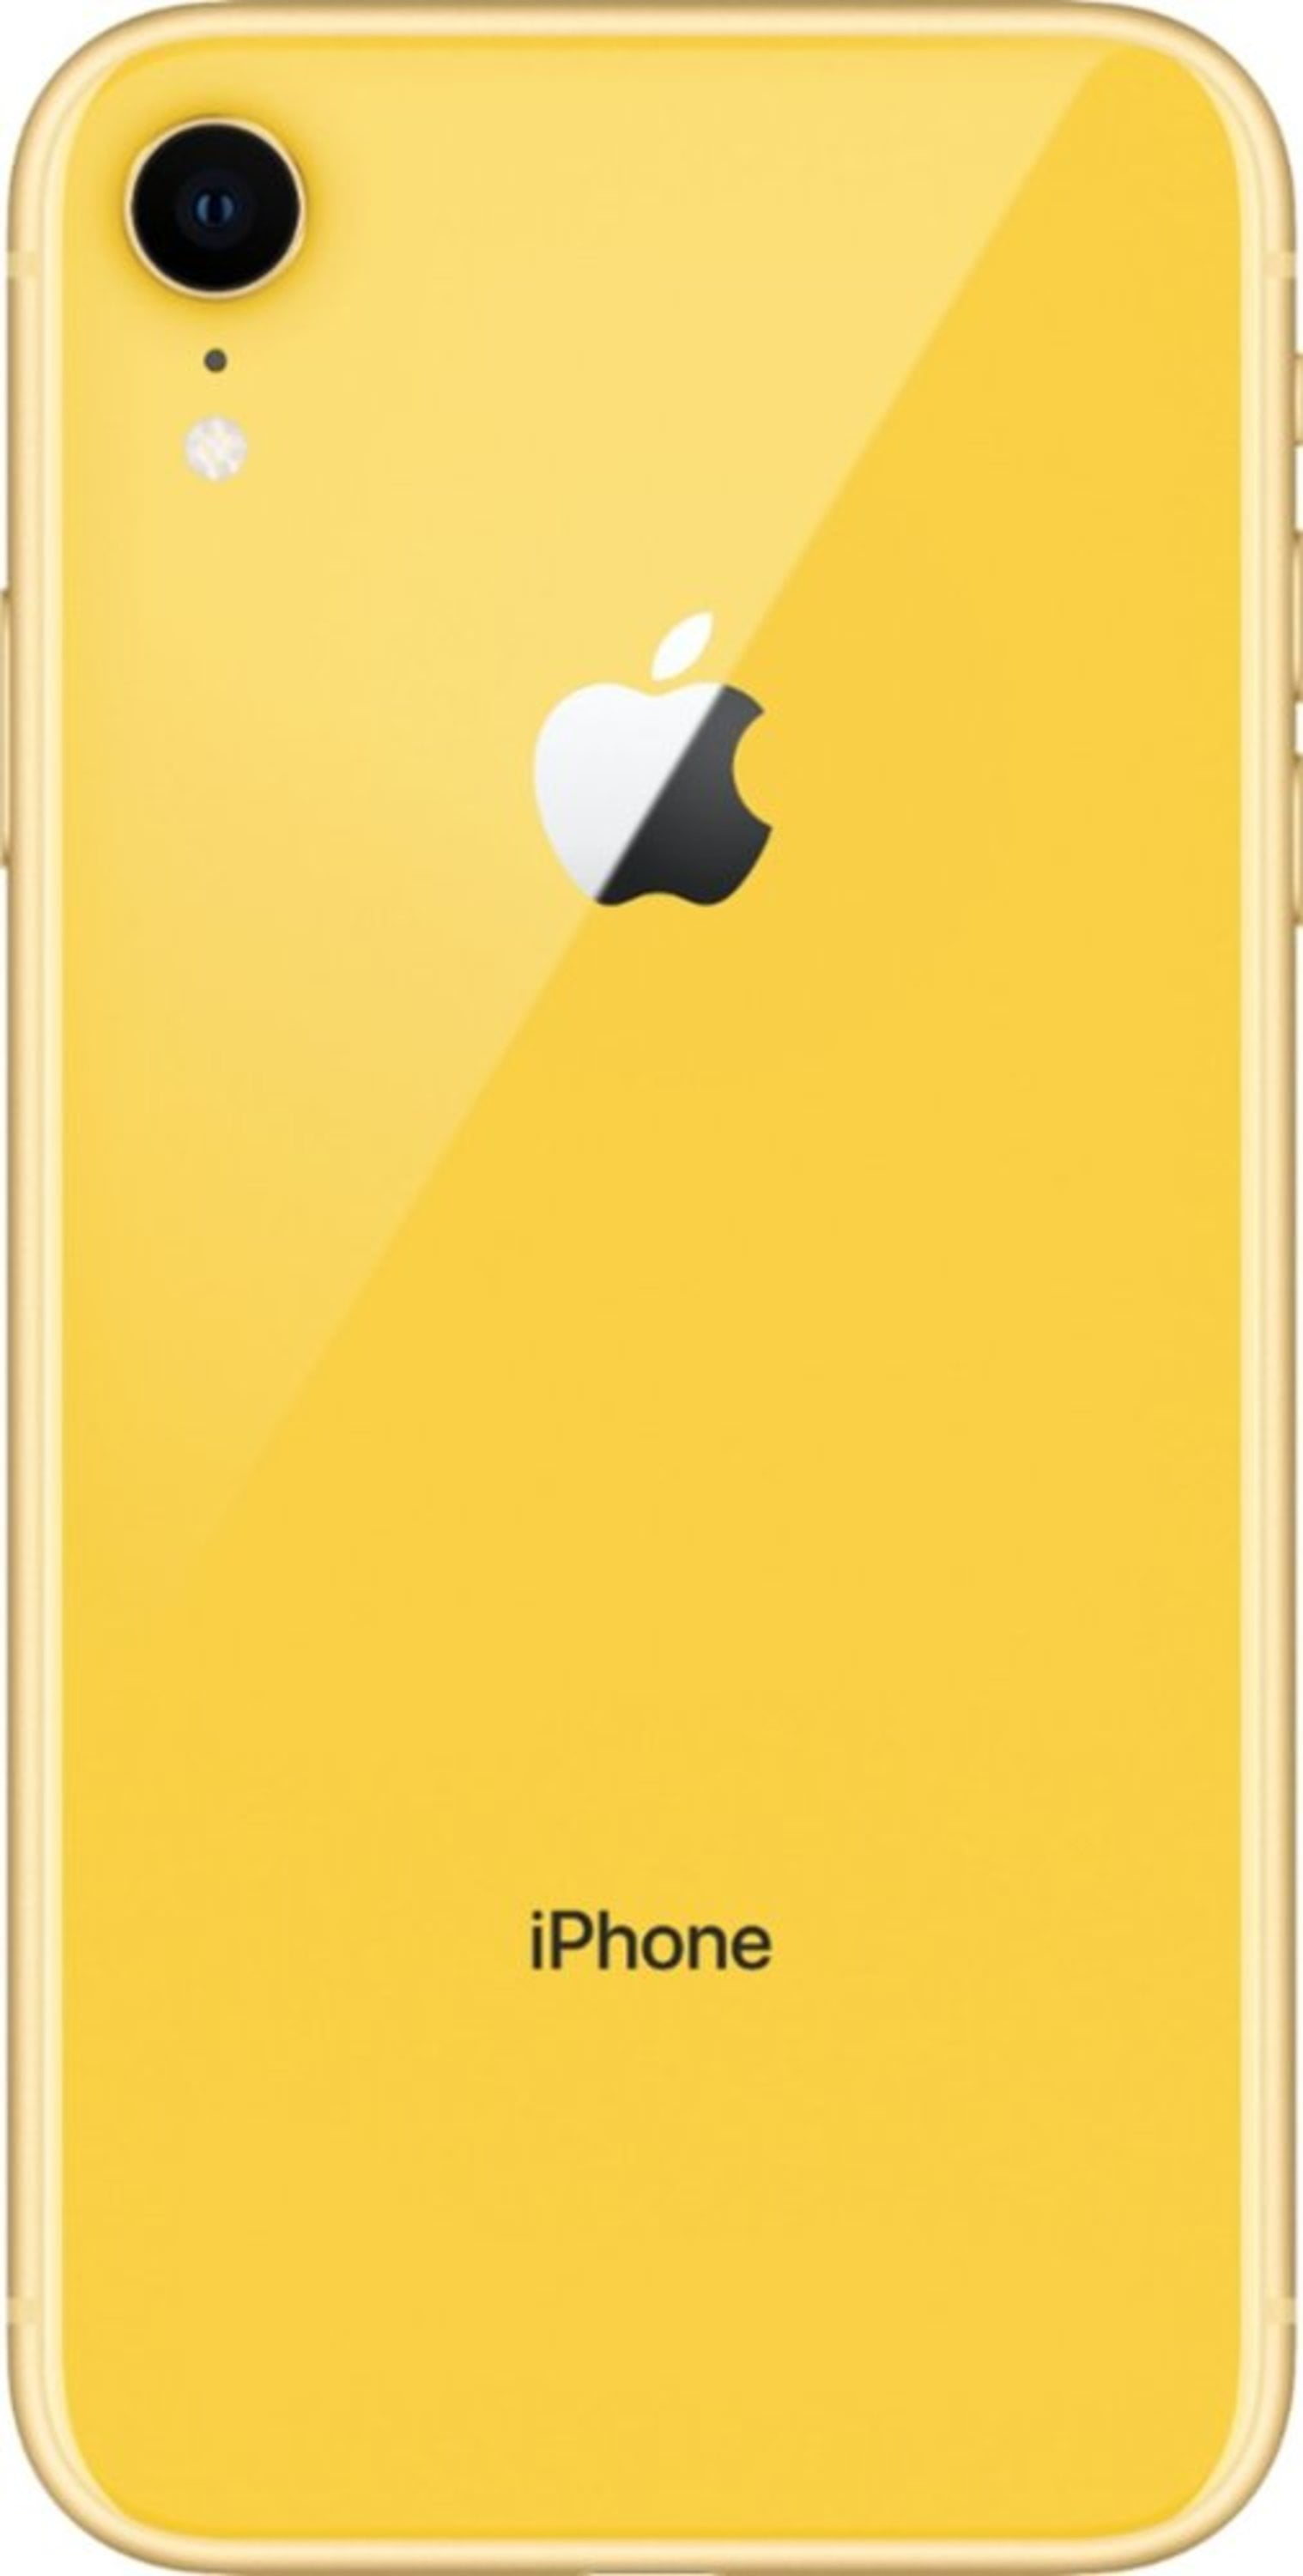 Pre-Owned Apple iPhone XR 256GB Fully Unlocked (Verizon + Sprint + 